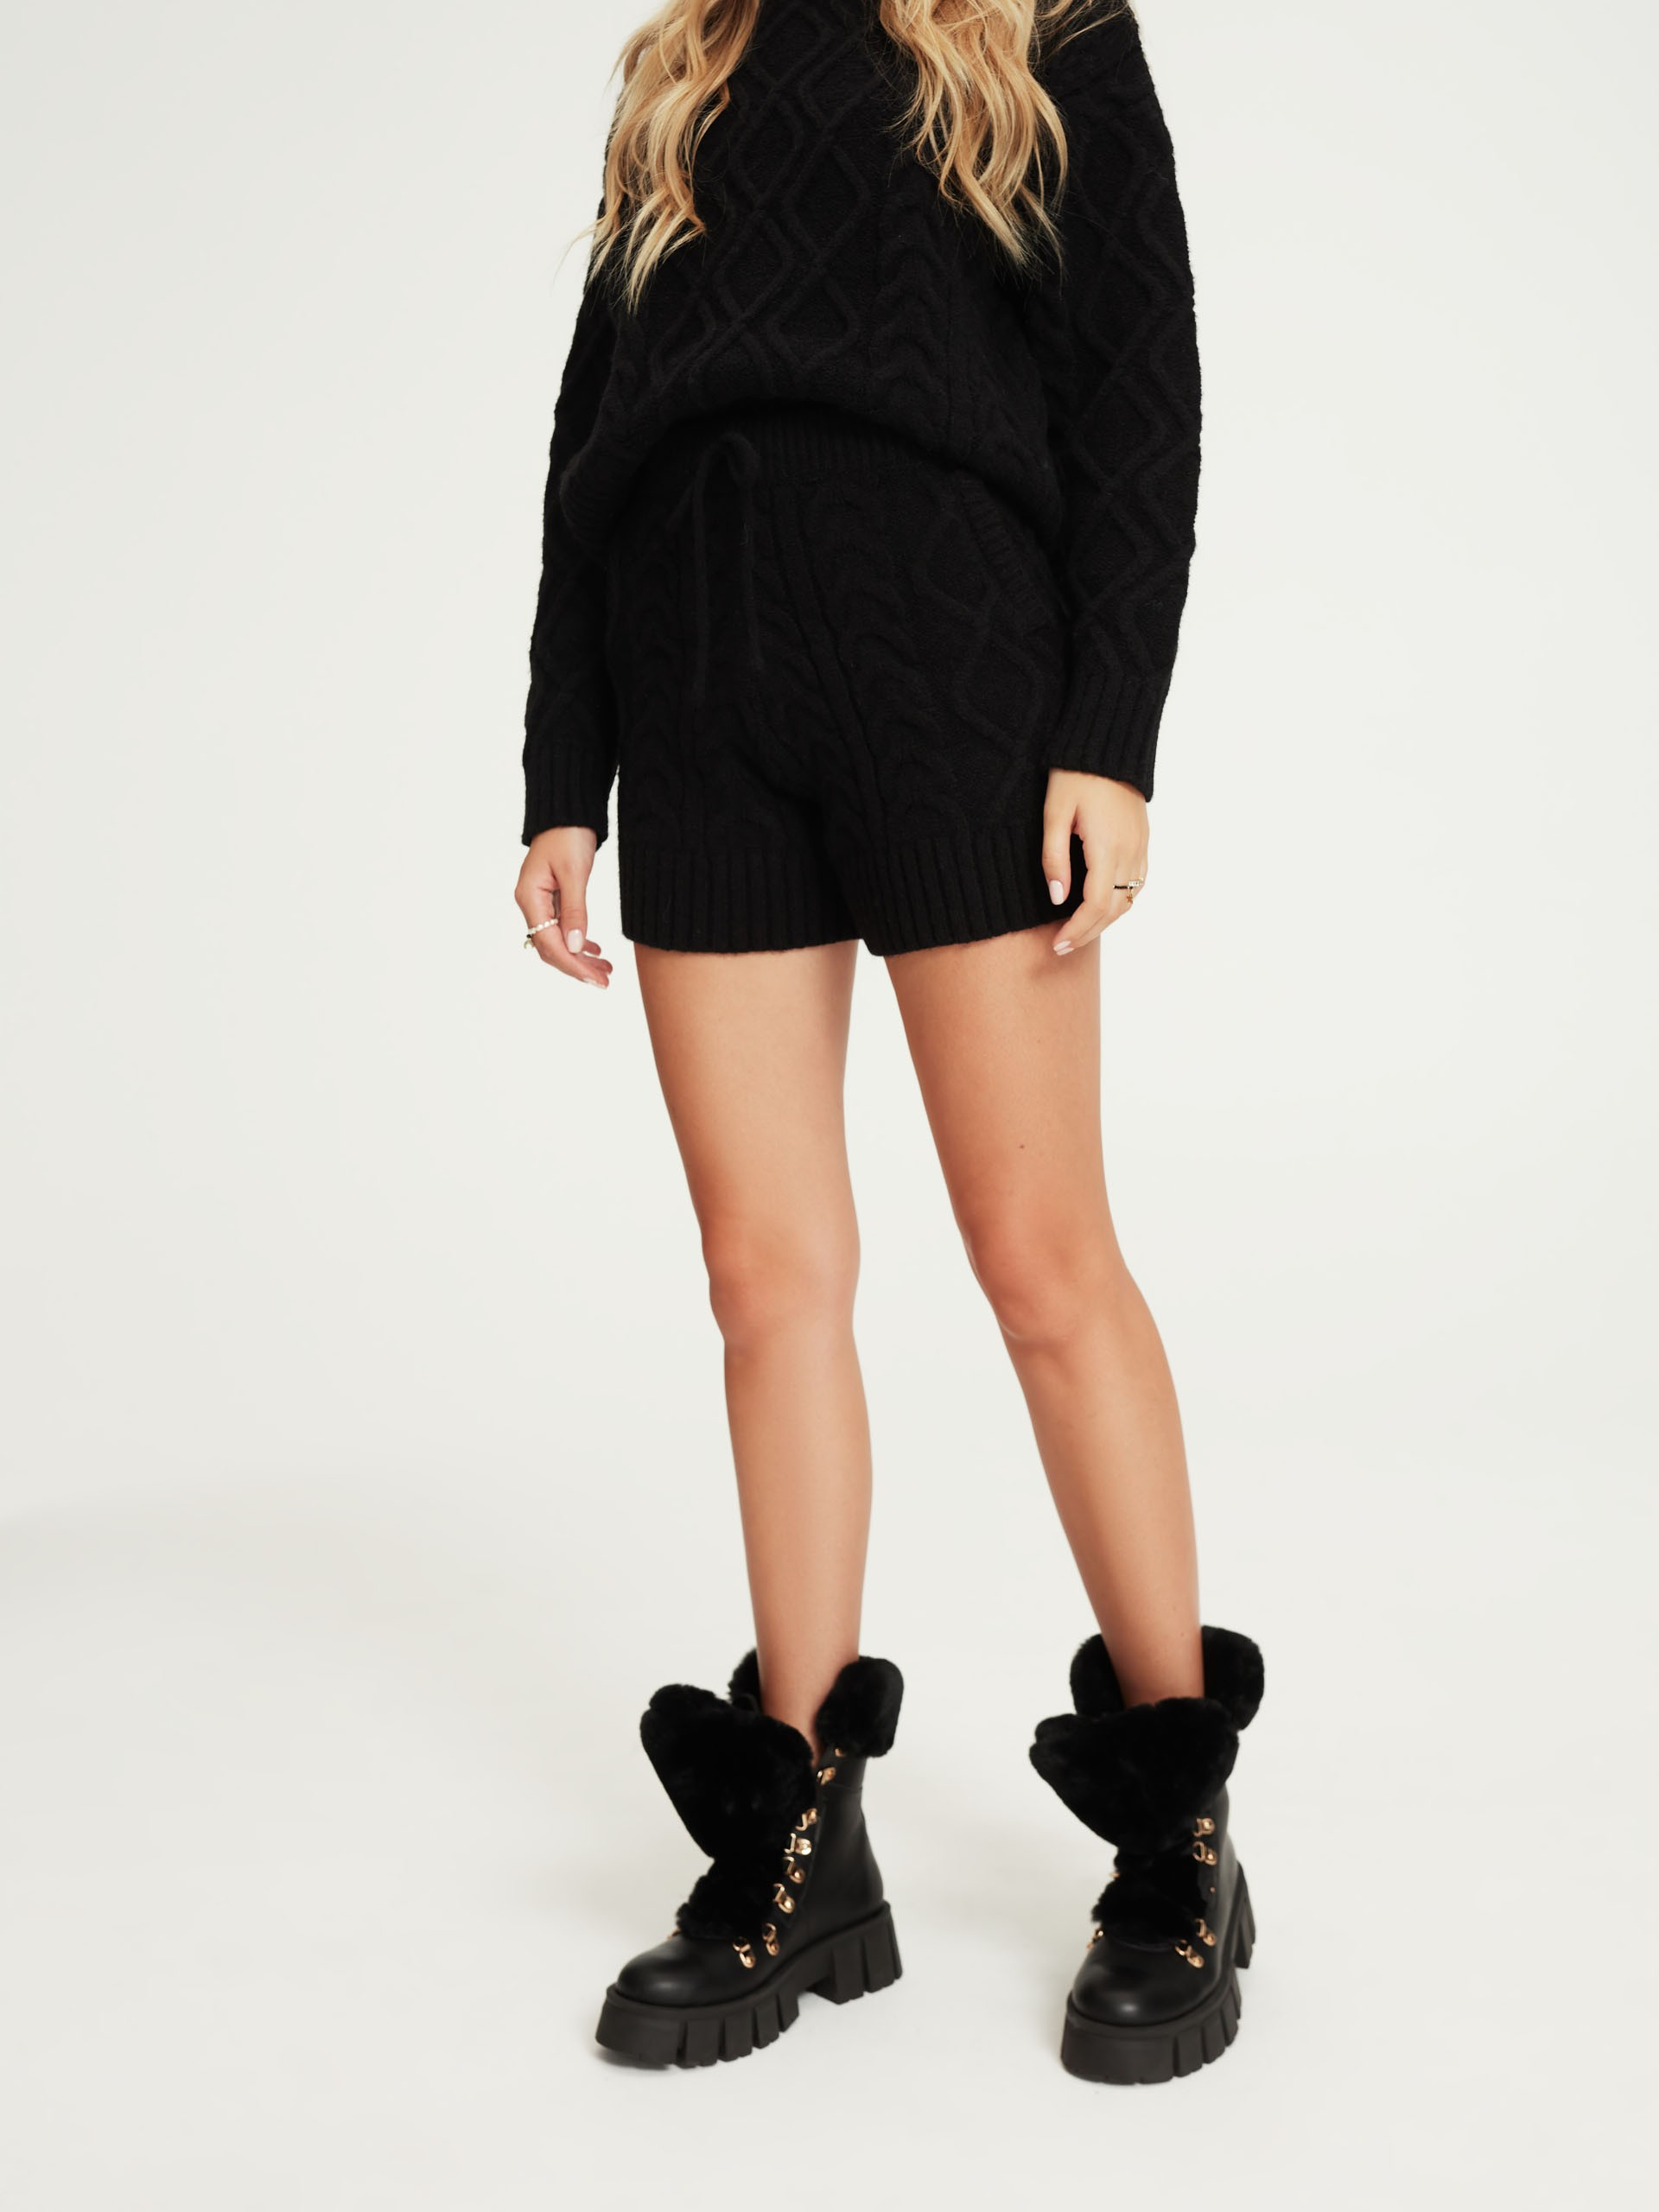 Black knit shorts